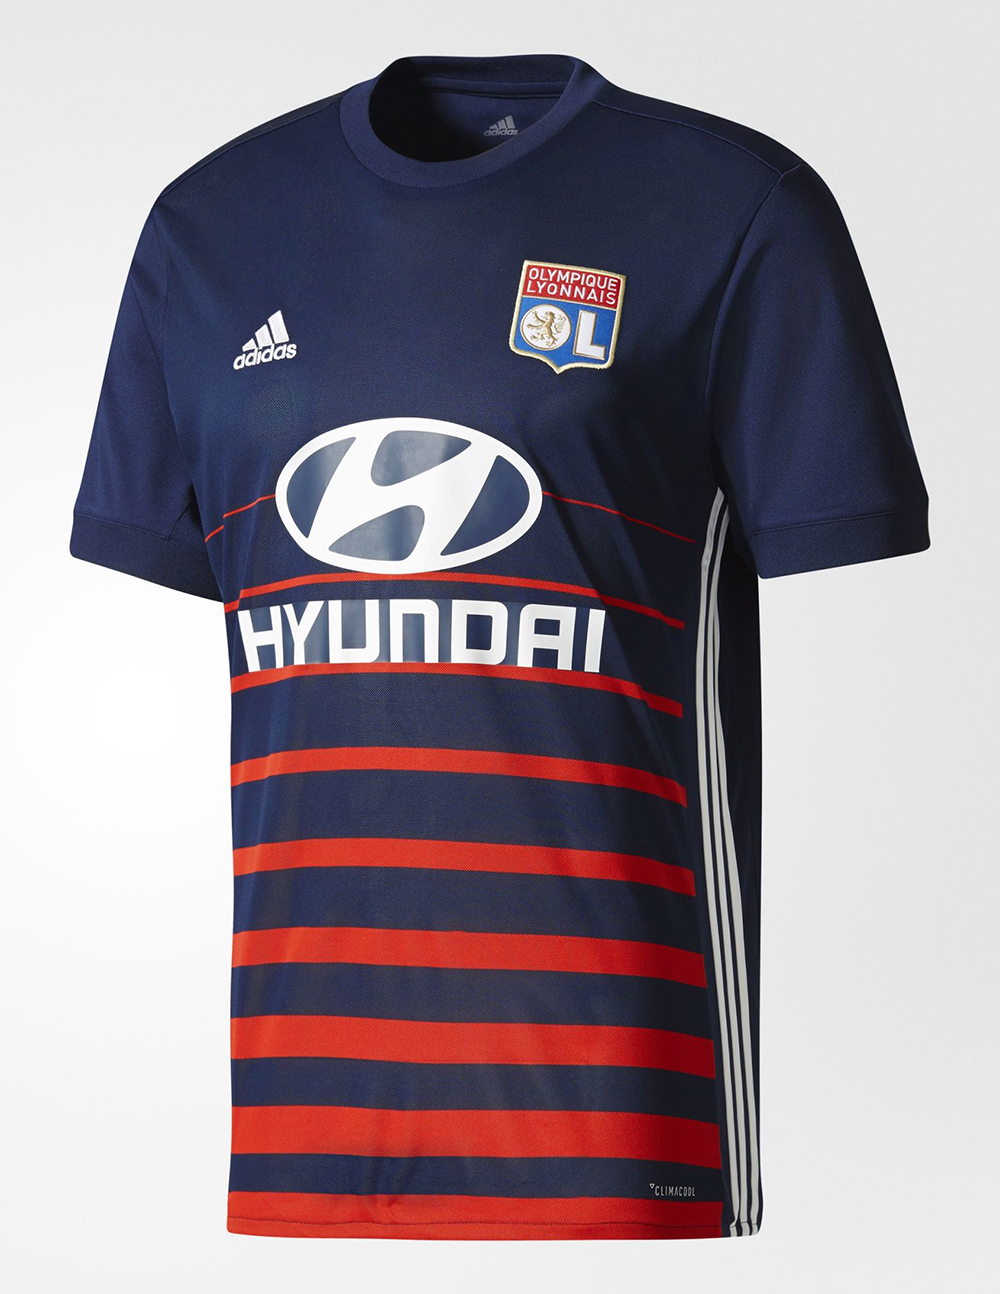 Olympique Lyonnais adidas Away Kit 2017 18